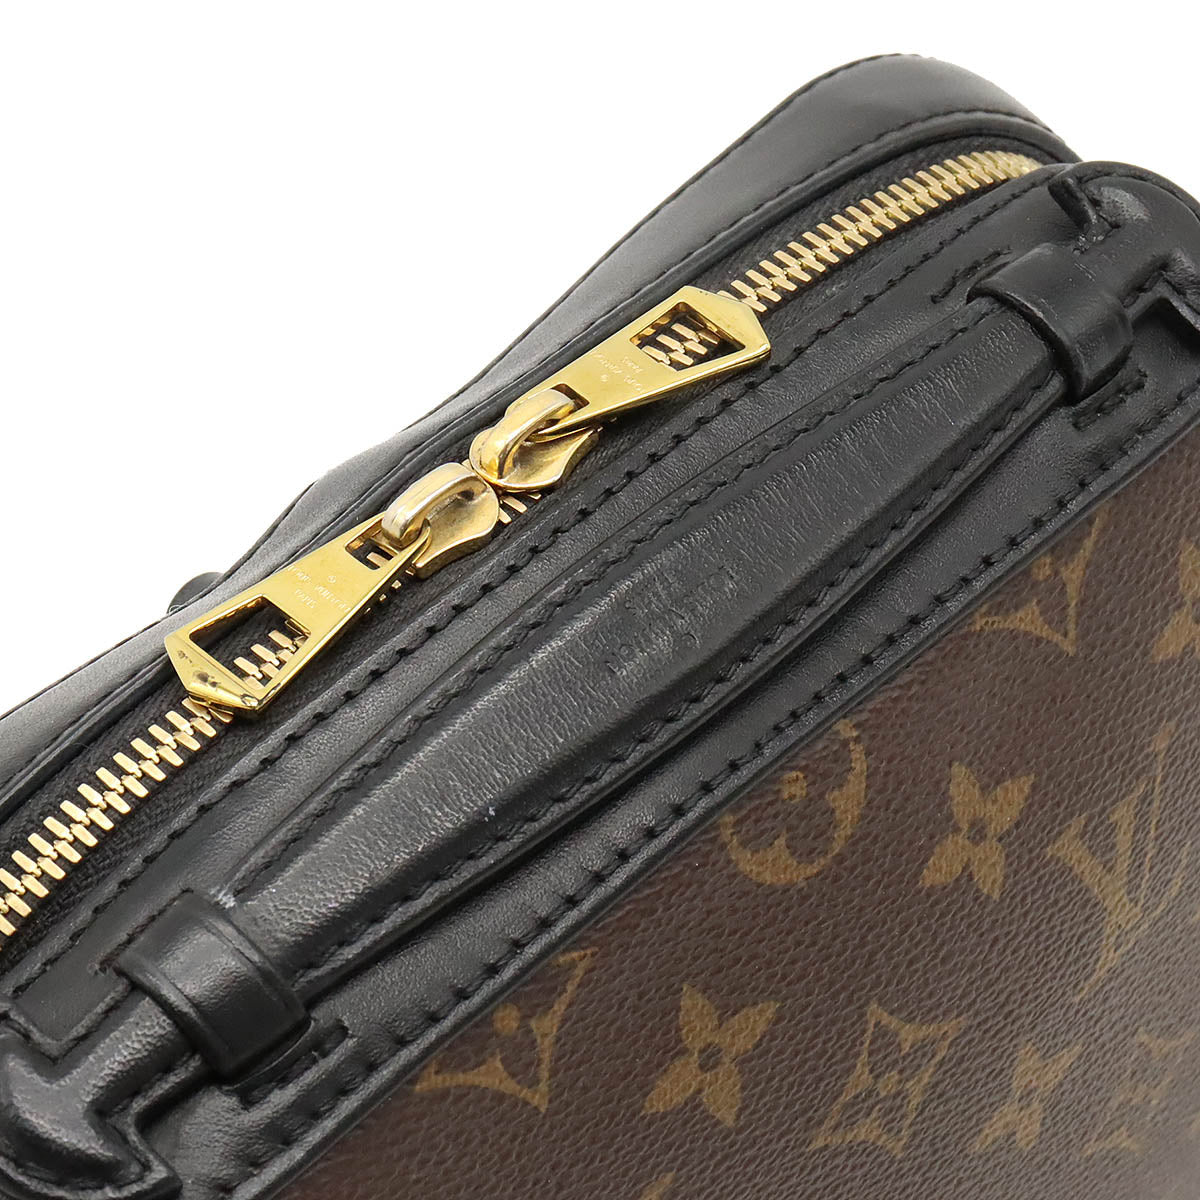 Louis Vuitton Monogram Sandwich Shoulder Bag 2WAY Tassel Handbag Noir Black Black M43555